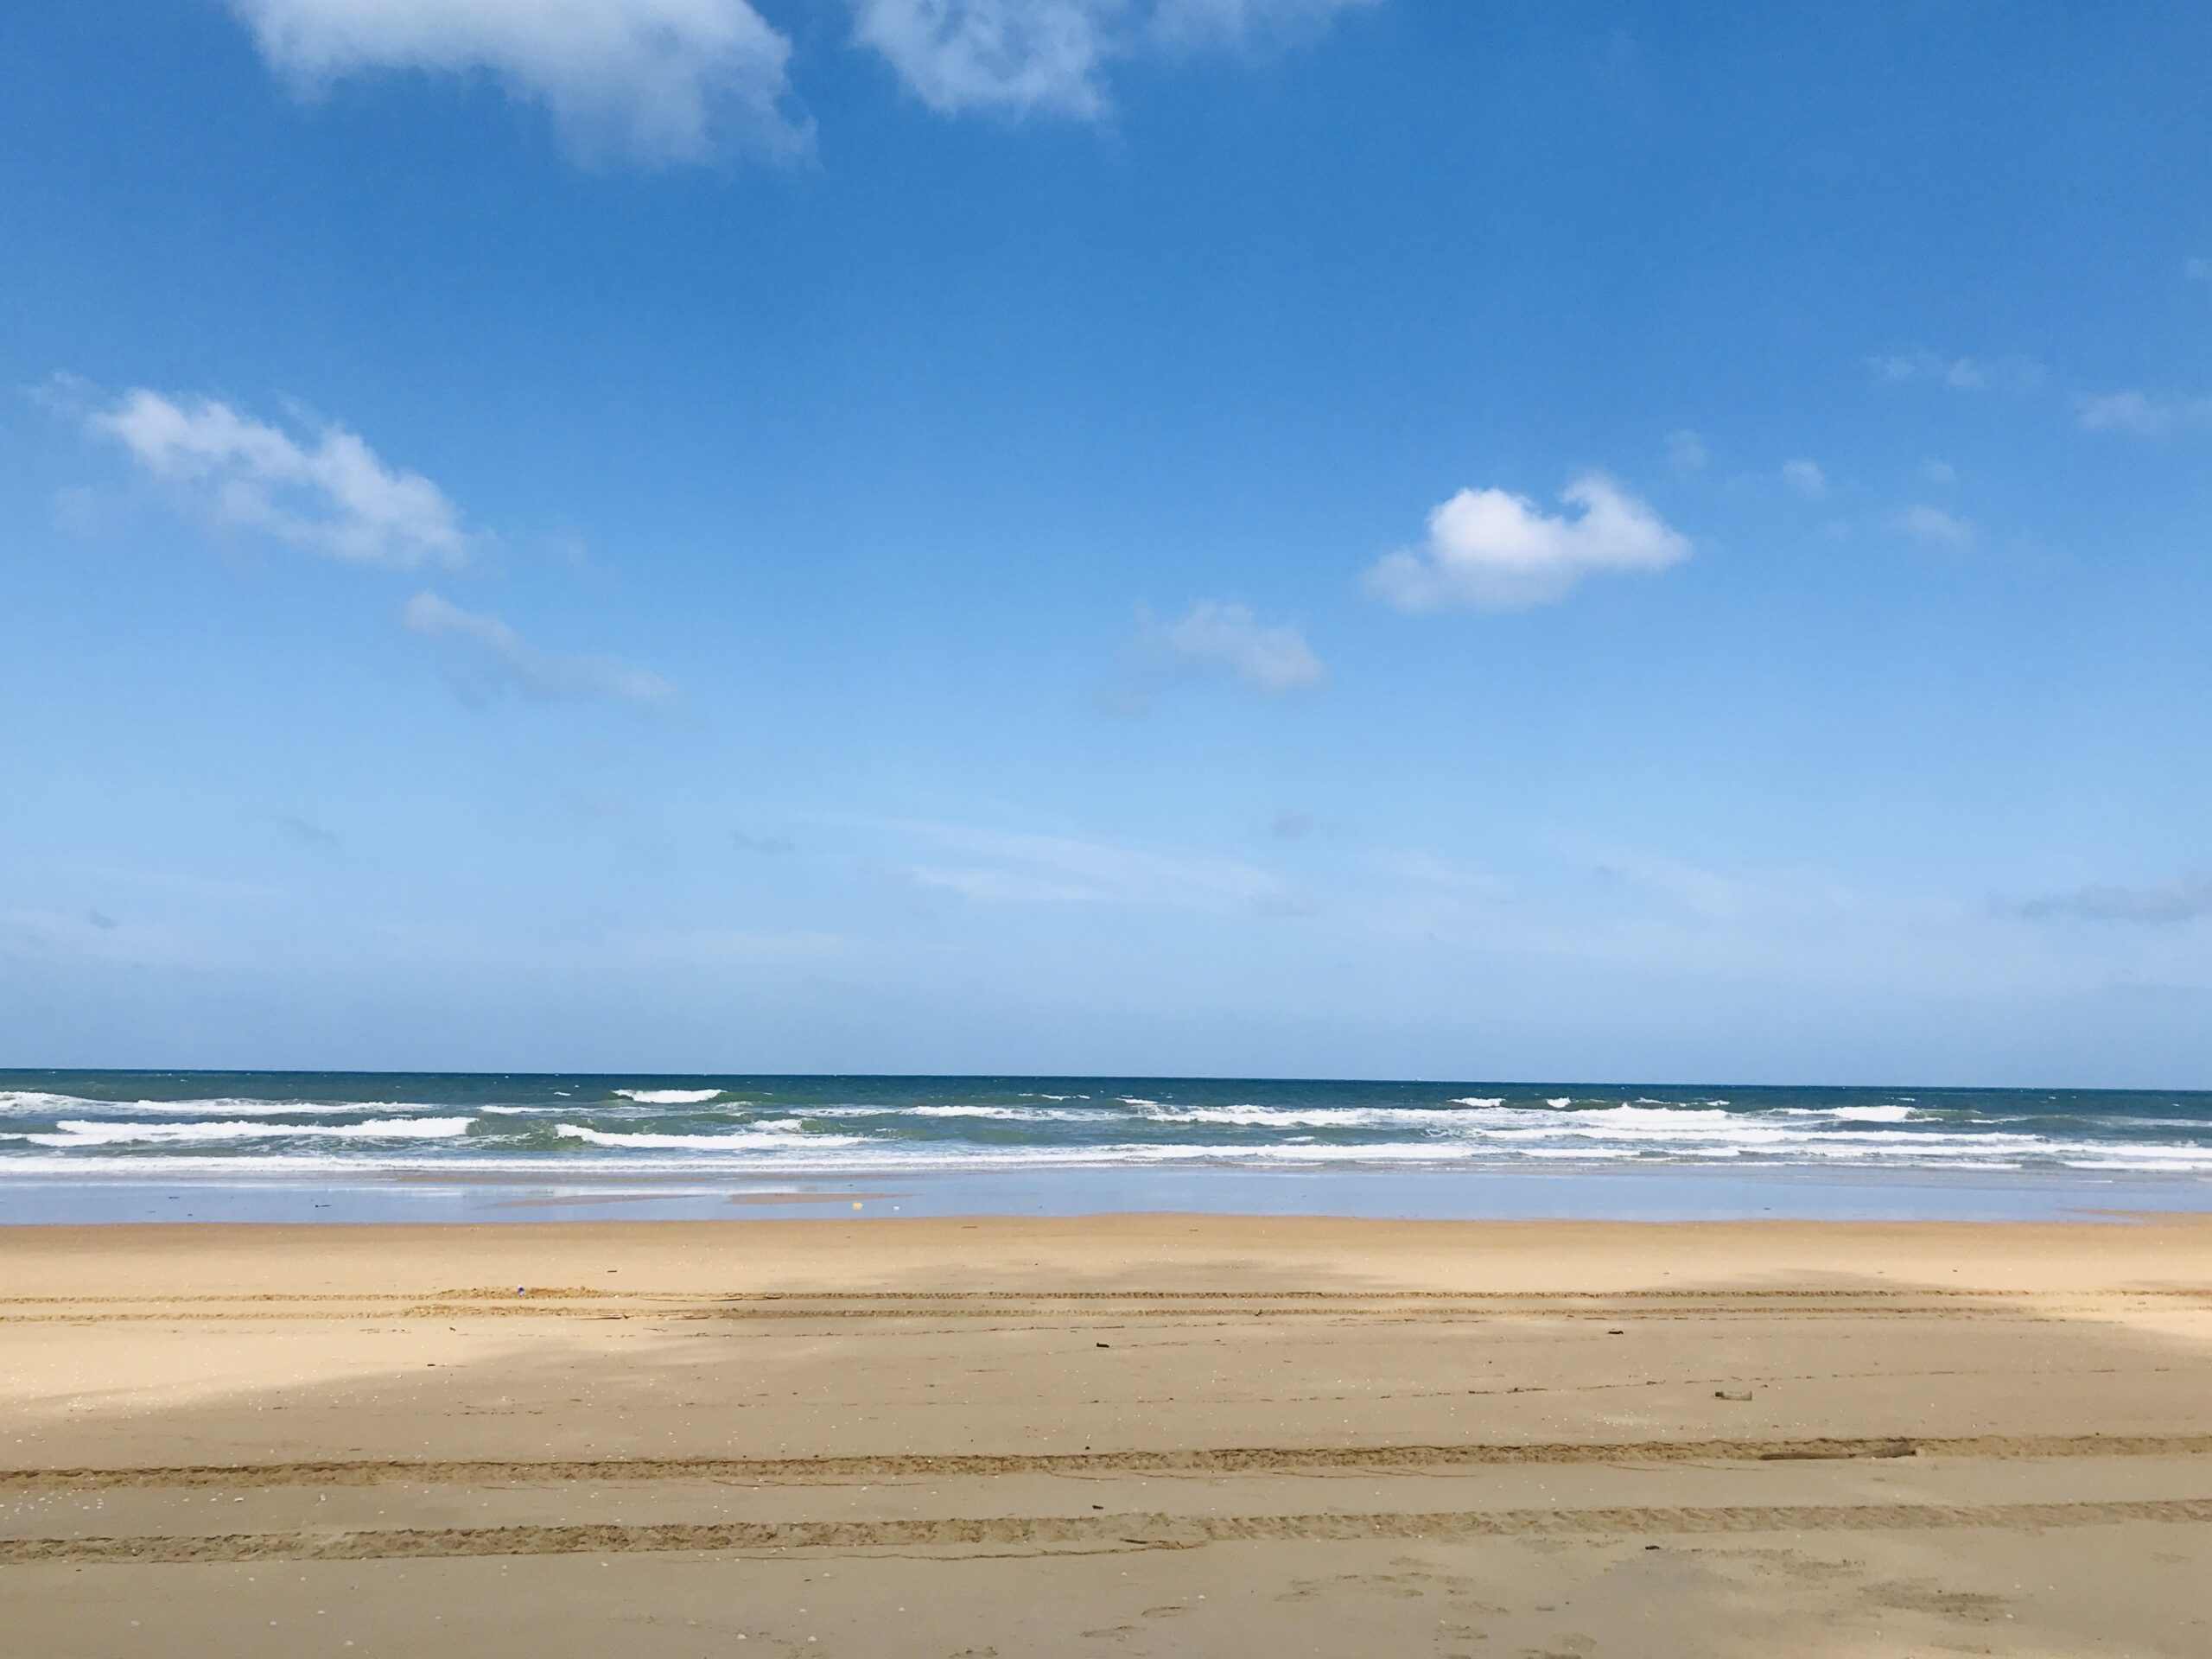 blue sky with waves and sandy beach 2022 01 25 20 09 11 utc